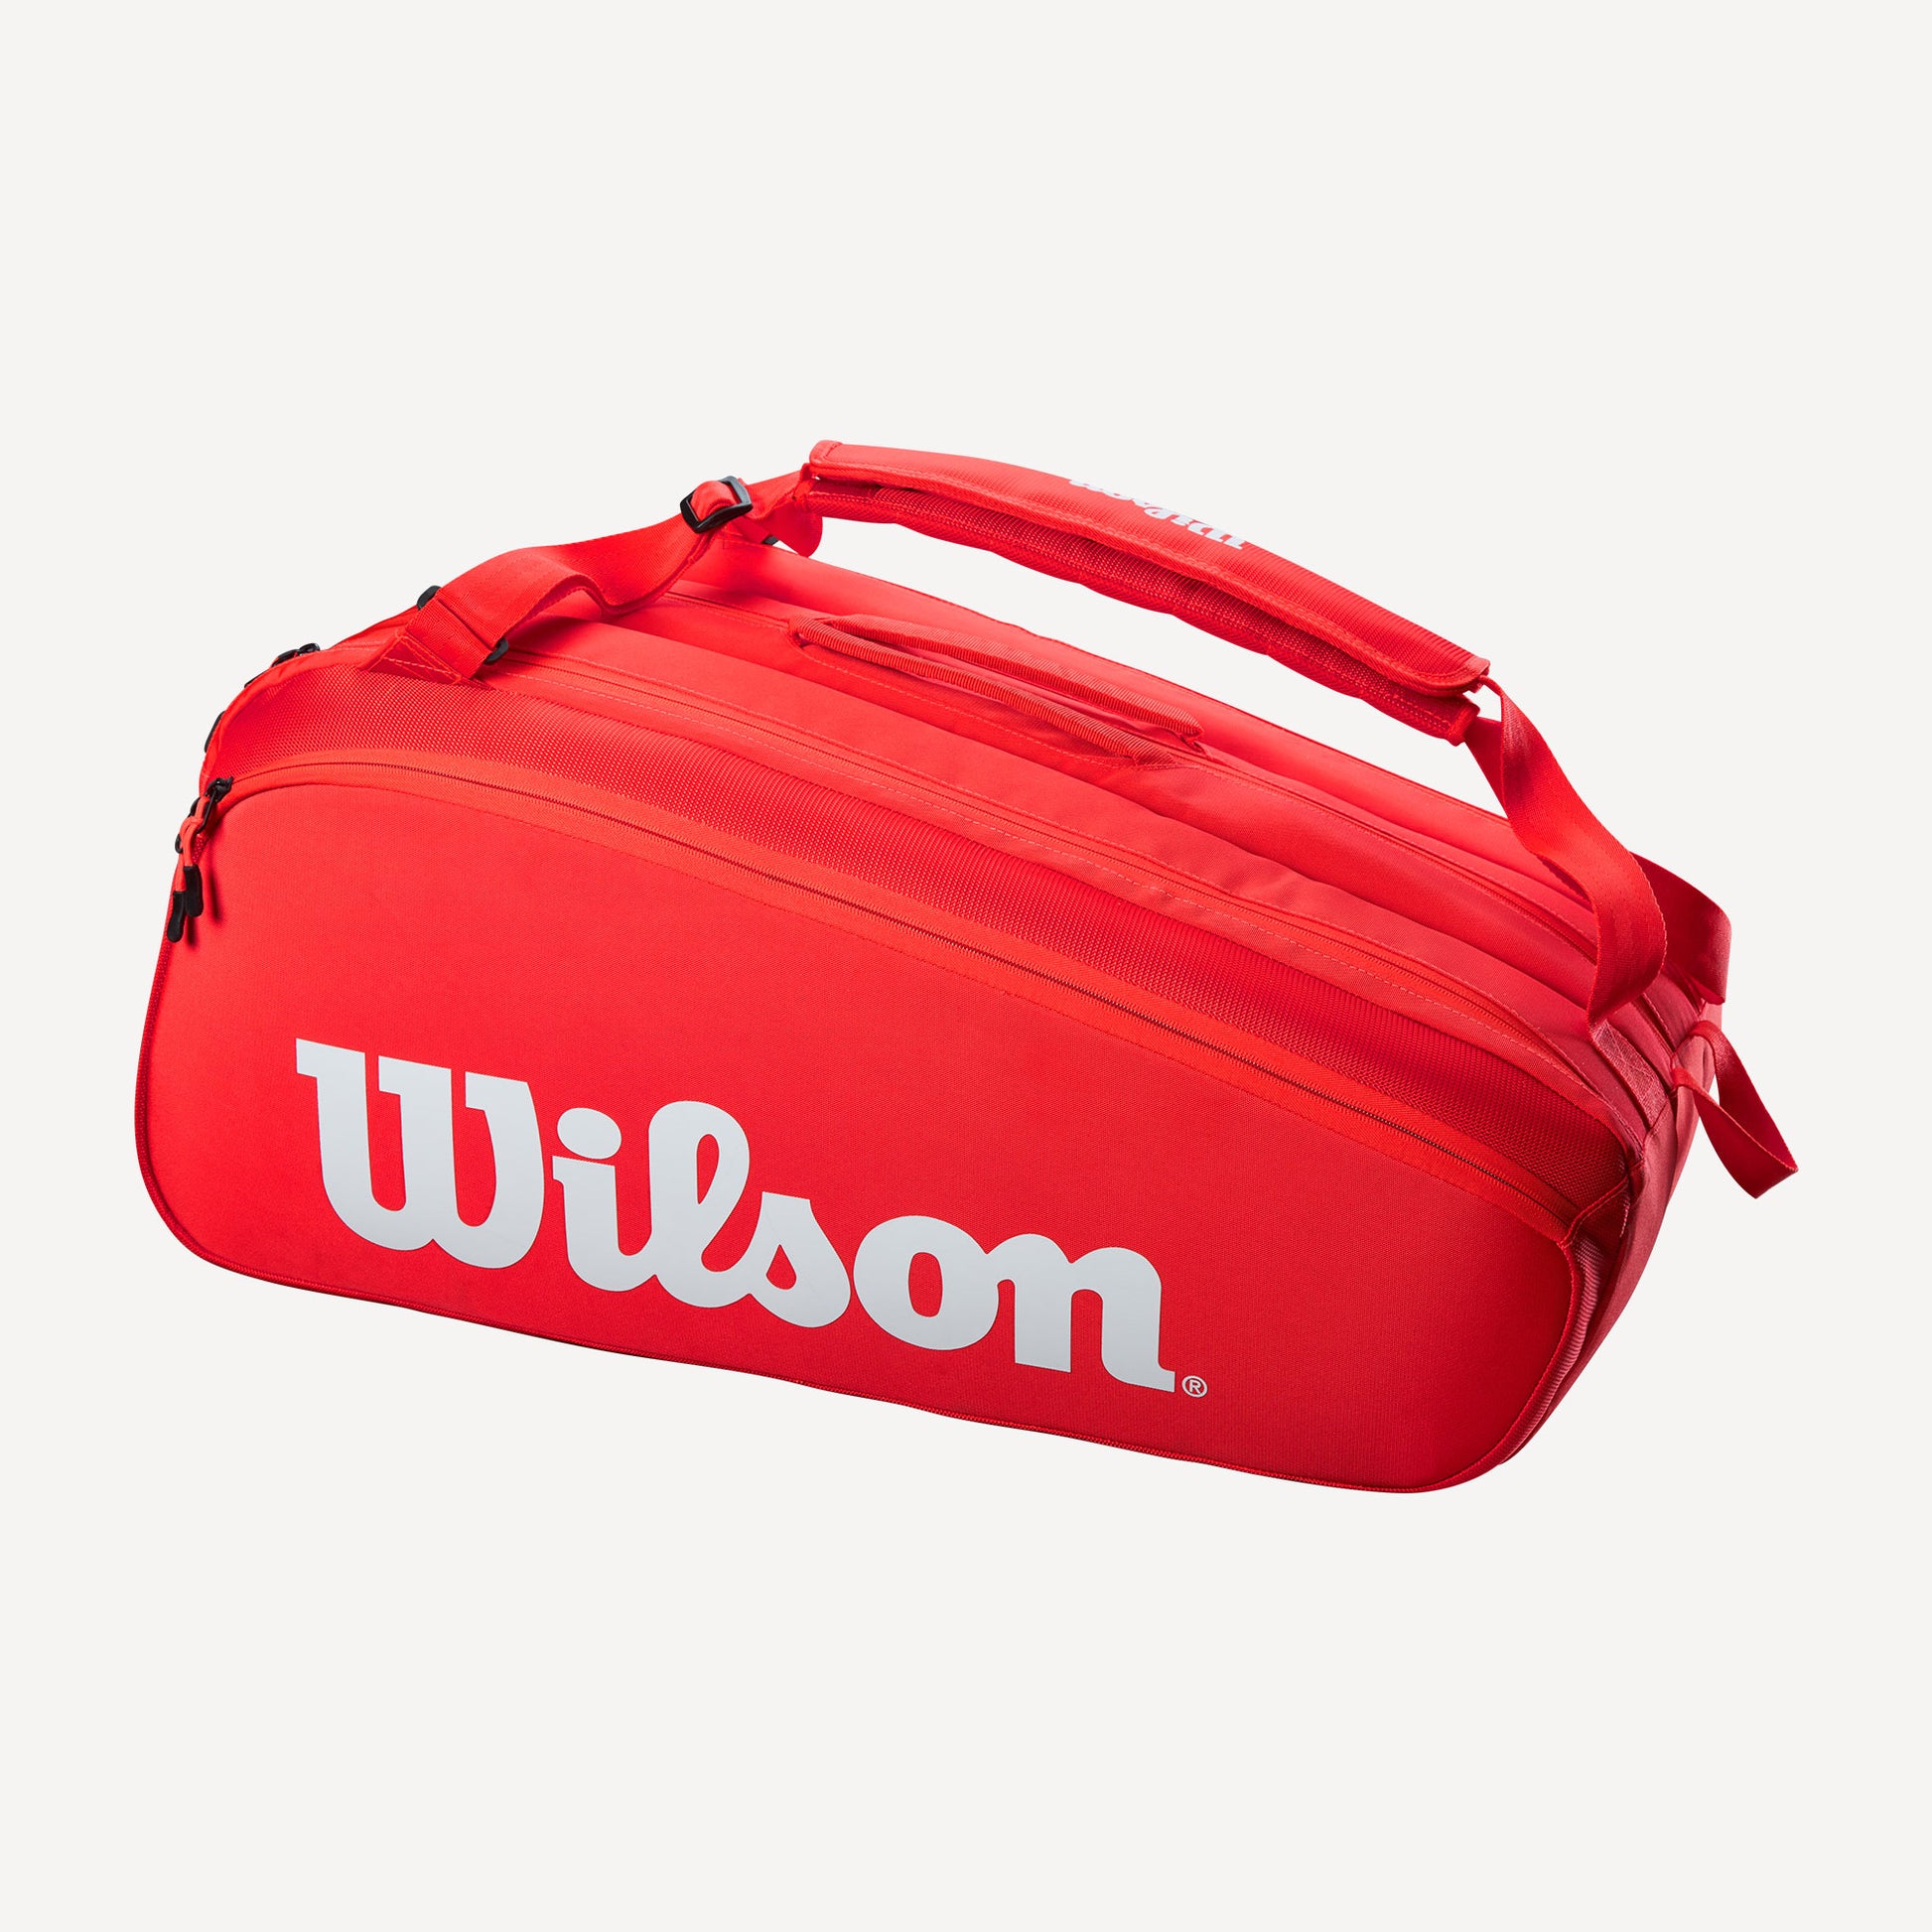 Wilson Super Tour 15 Pack Tennis Bag Red (2)